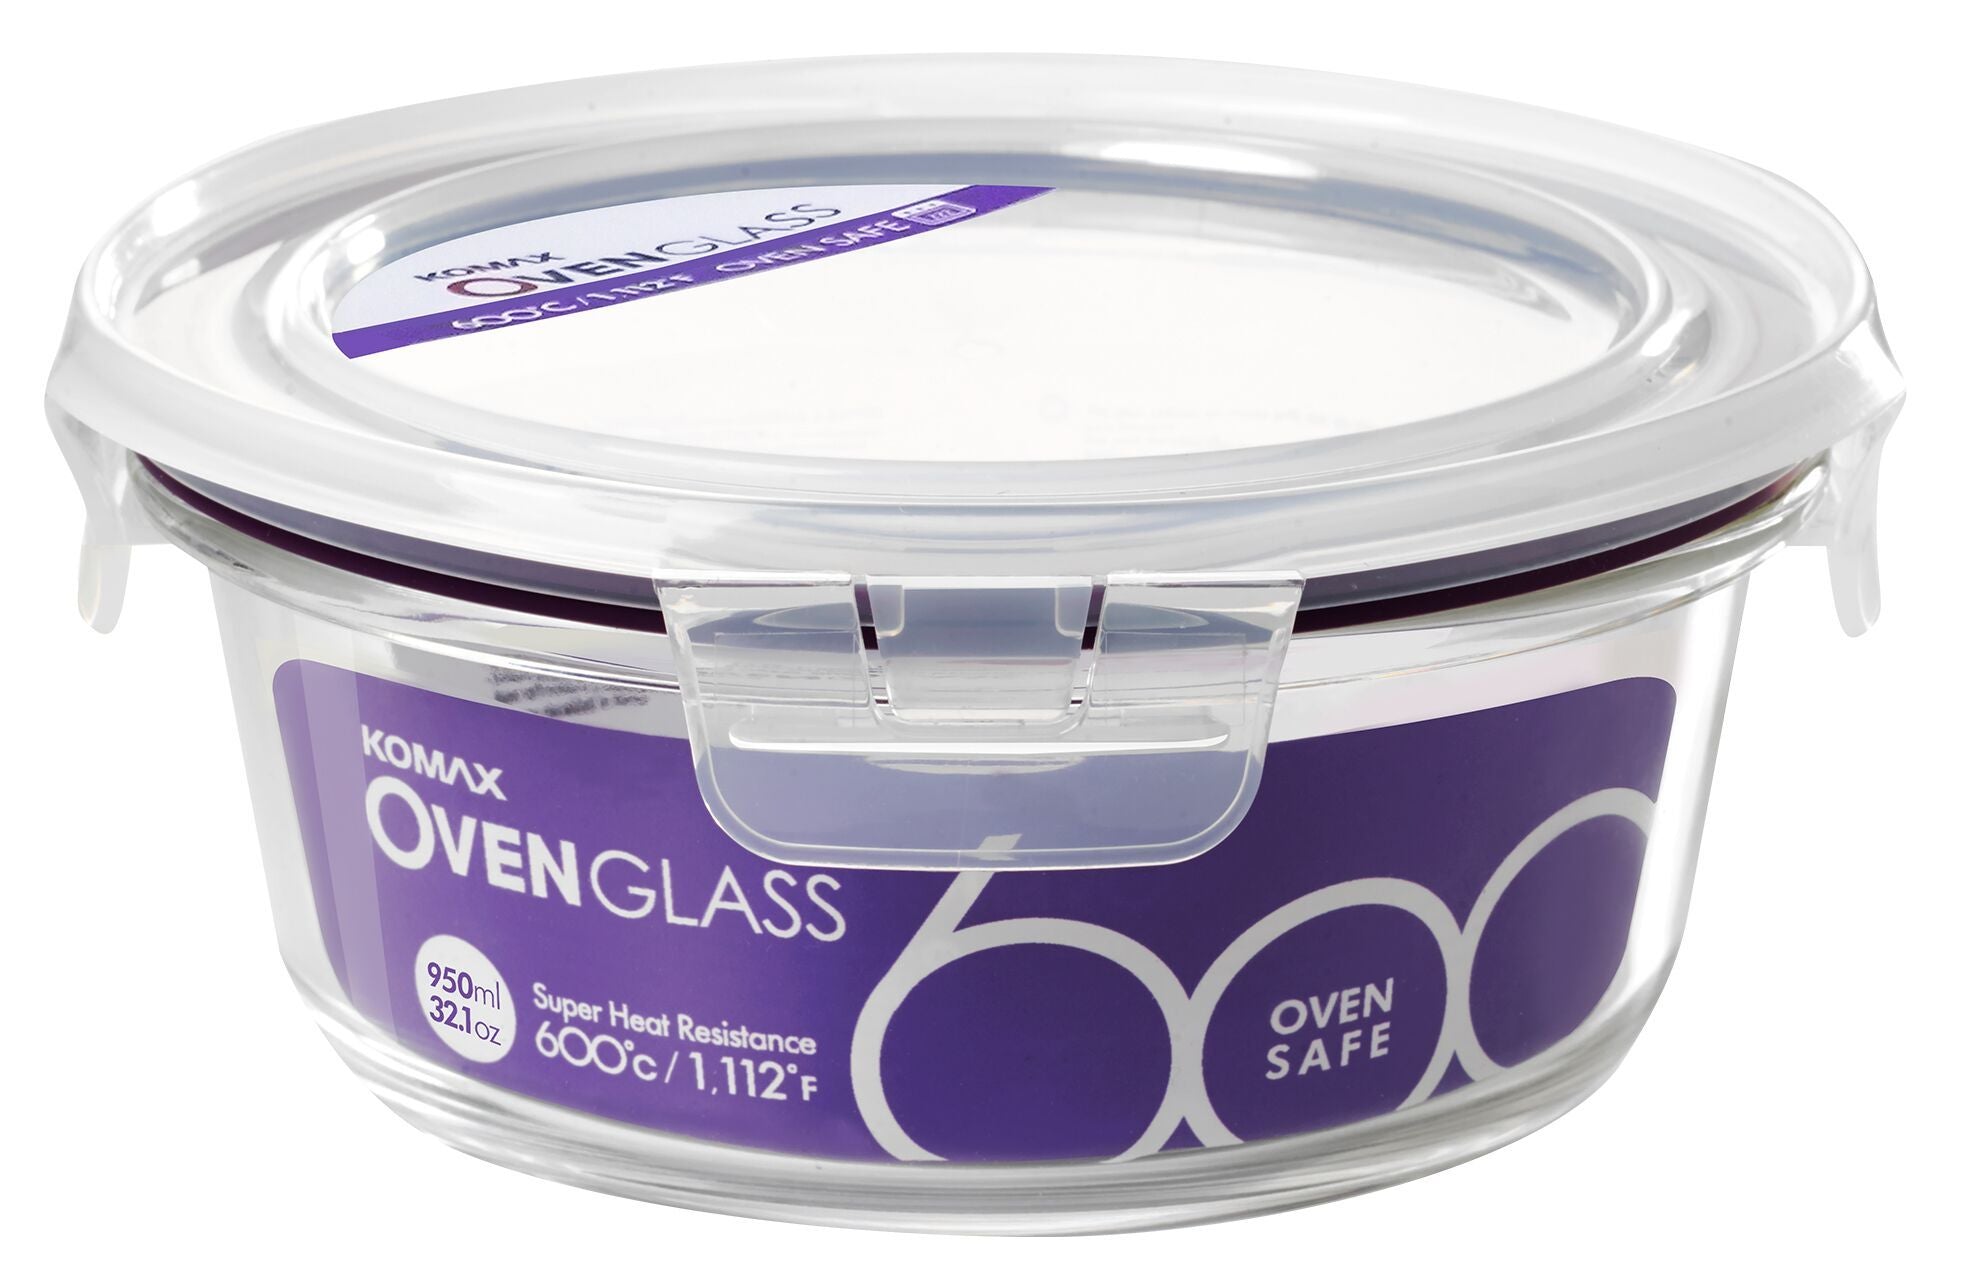 Komax Oven Glass Round Food Storage Container, 950 ml